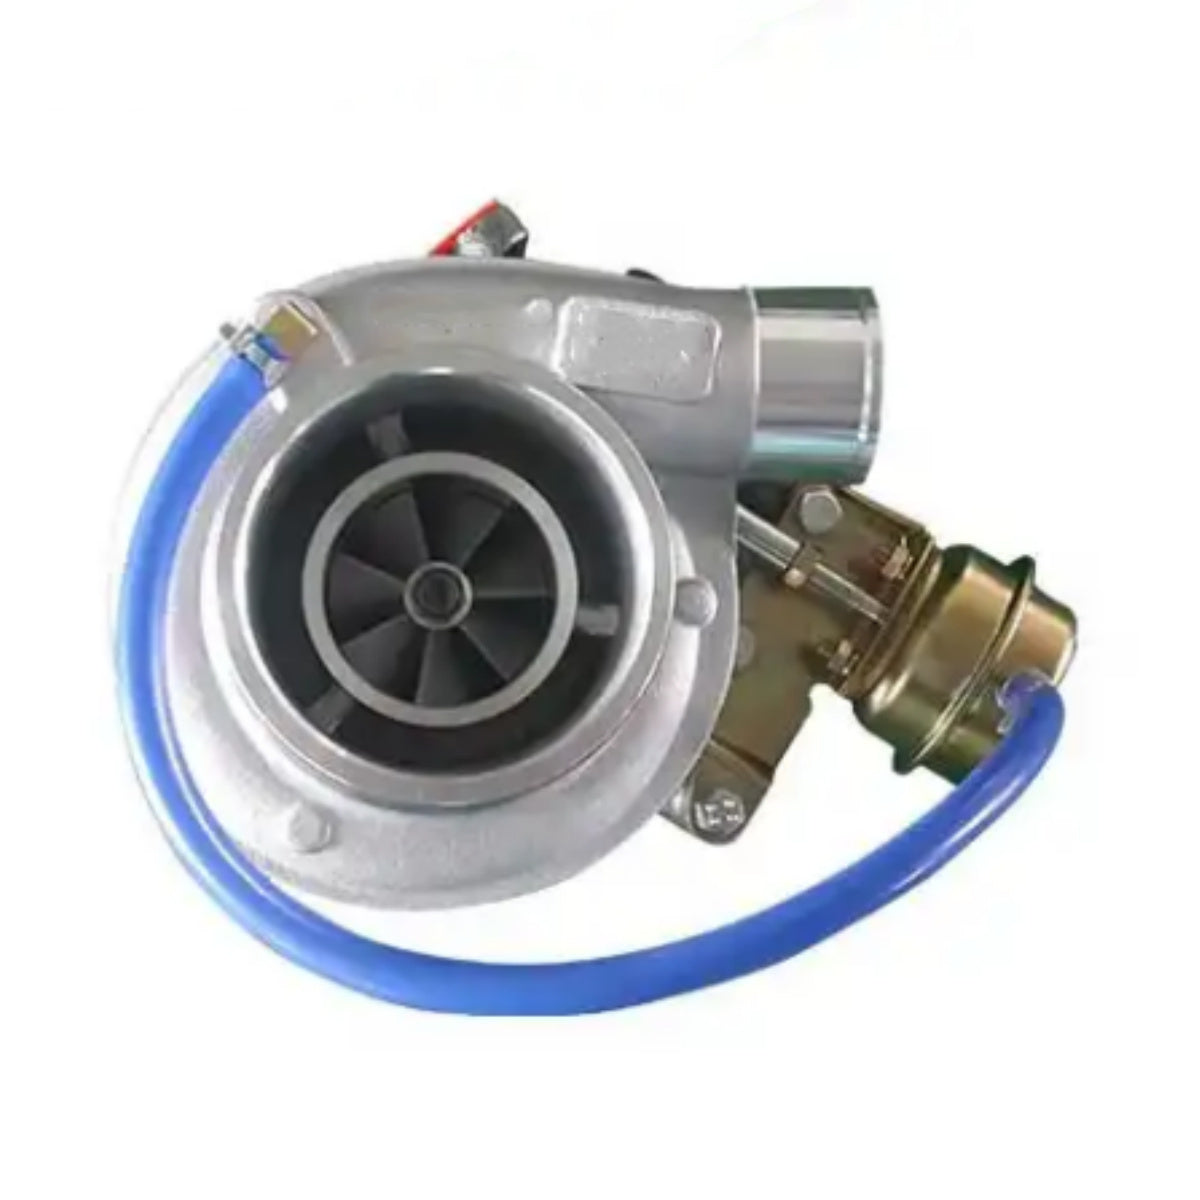 105-5059 1055059 Turbocharger for 3116 Engine Excavator Parts - Sinocmp